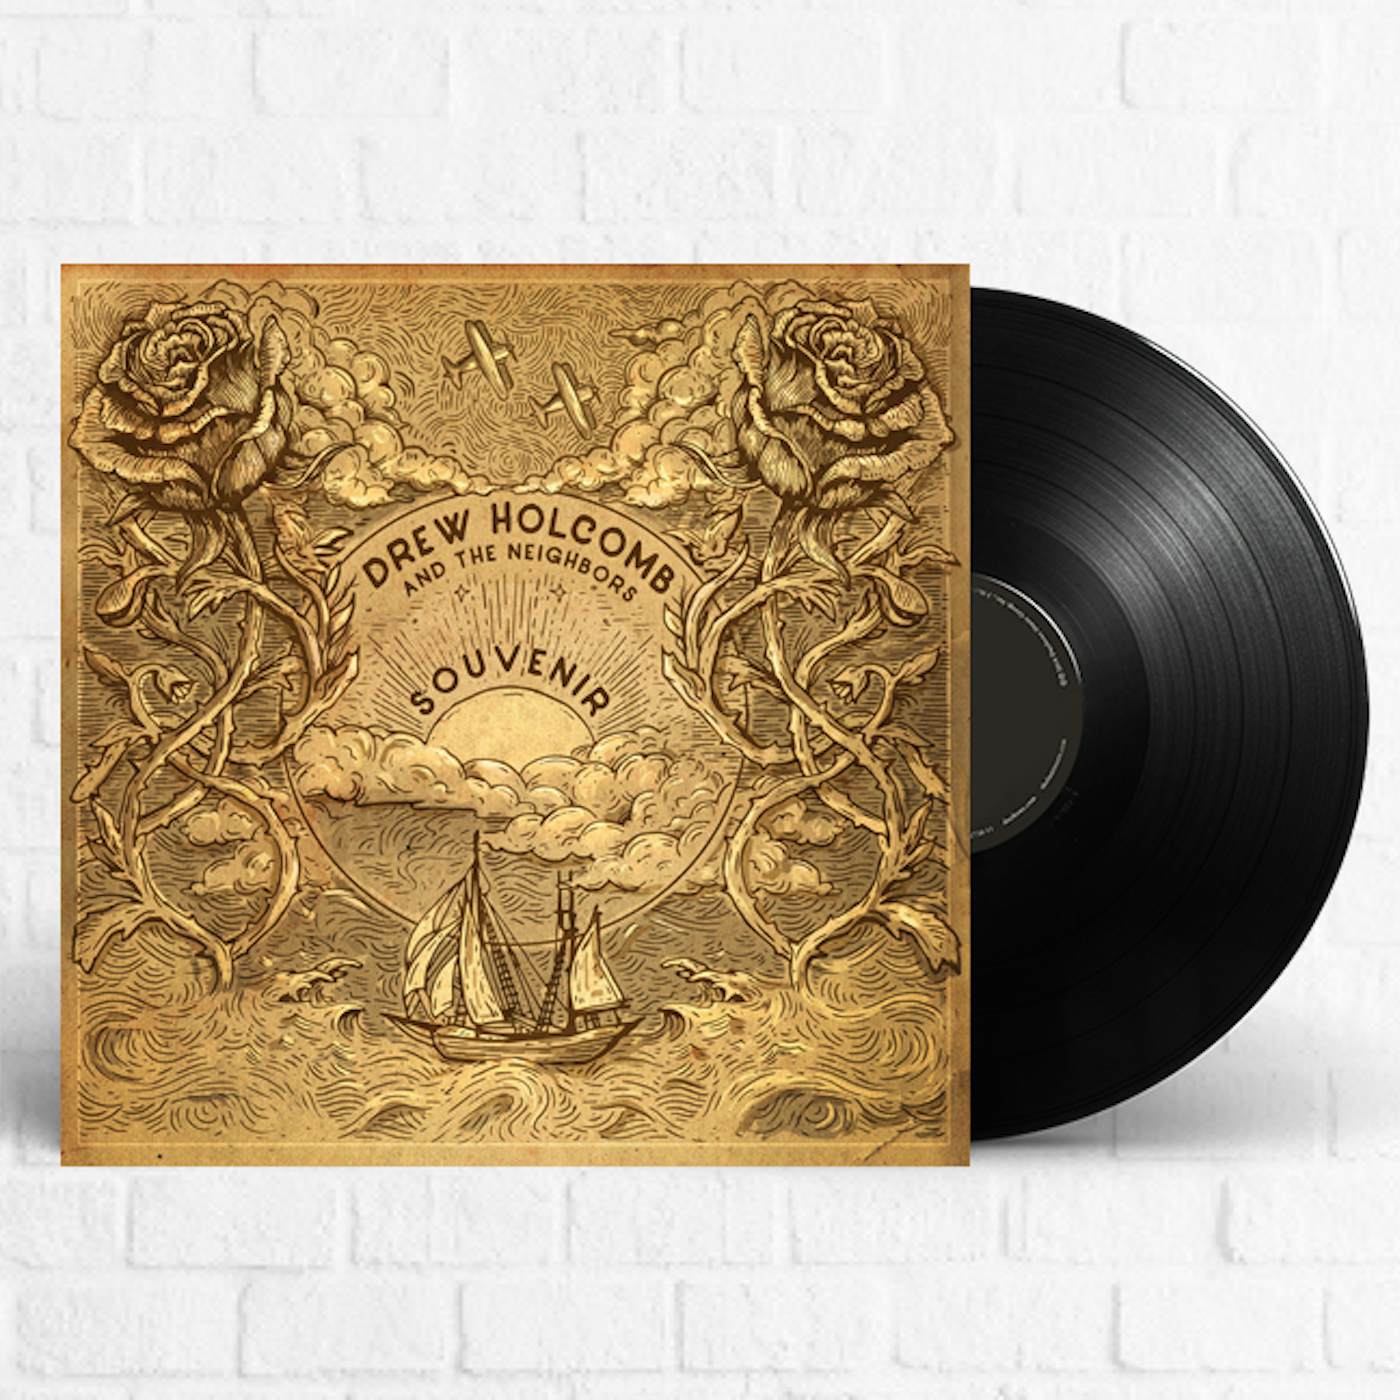 JOHNNYSWIM - Songs With Strangers Vinyl – JOHNNYSWIM Merch Shop